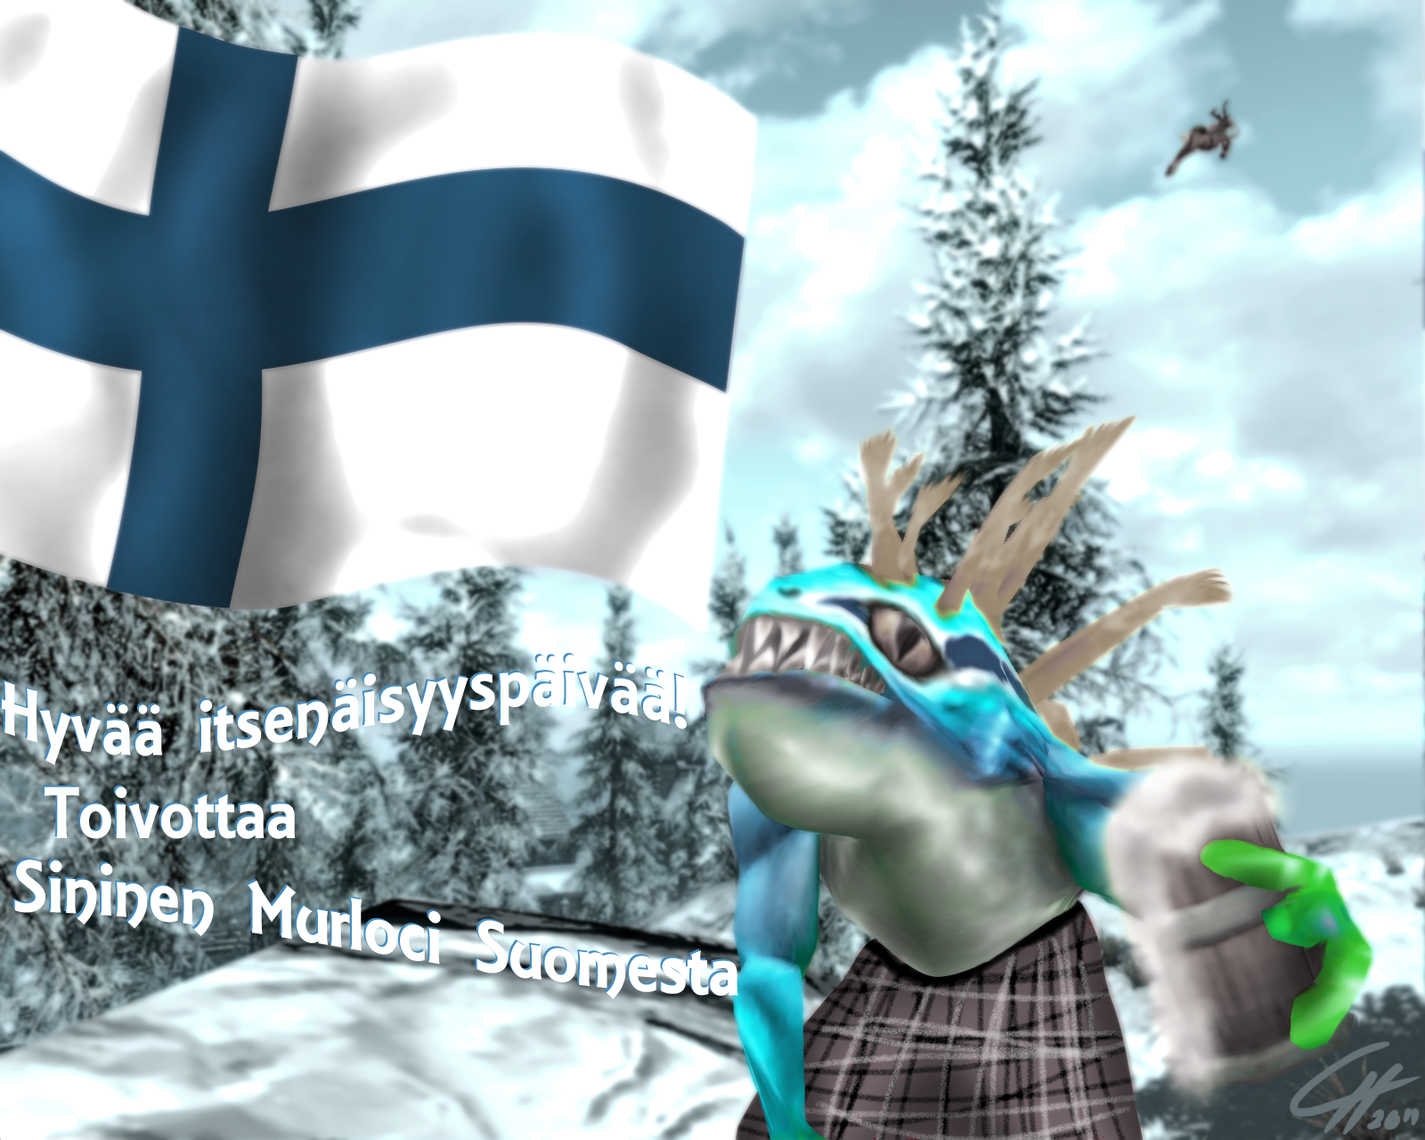 Mixed Patriotic Murloc [Murloc/Filler/SFW]
6th Dec is Finland's Independence Day.
Keywords: Murloc;SFW;Filler